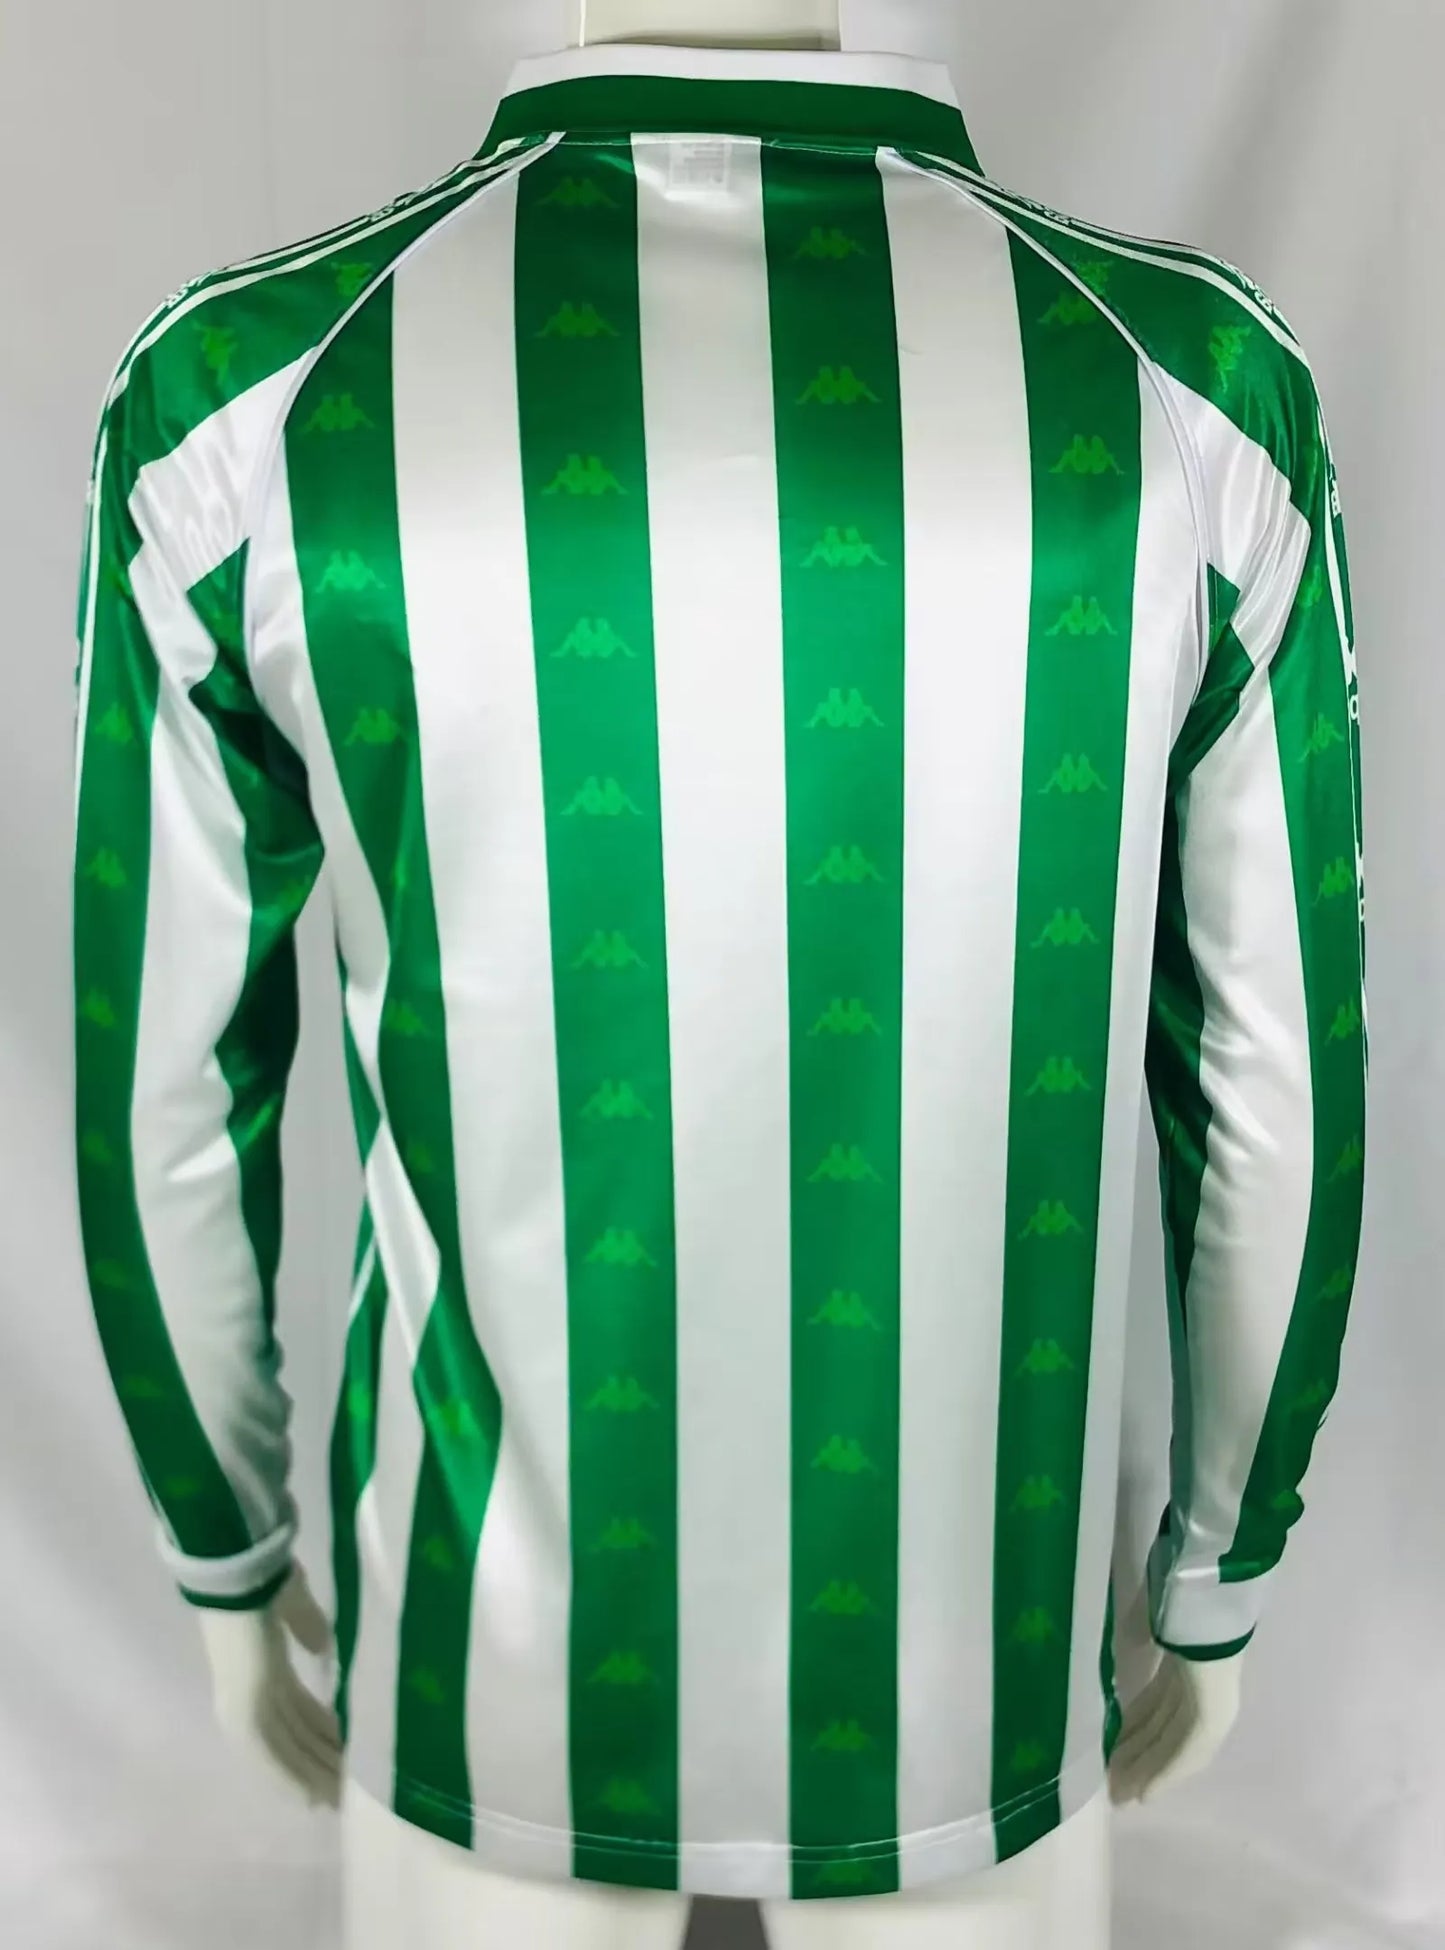 Real Betis 96-97 Home Long Sleeve Shirt